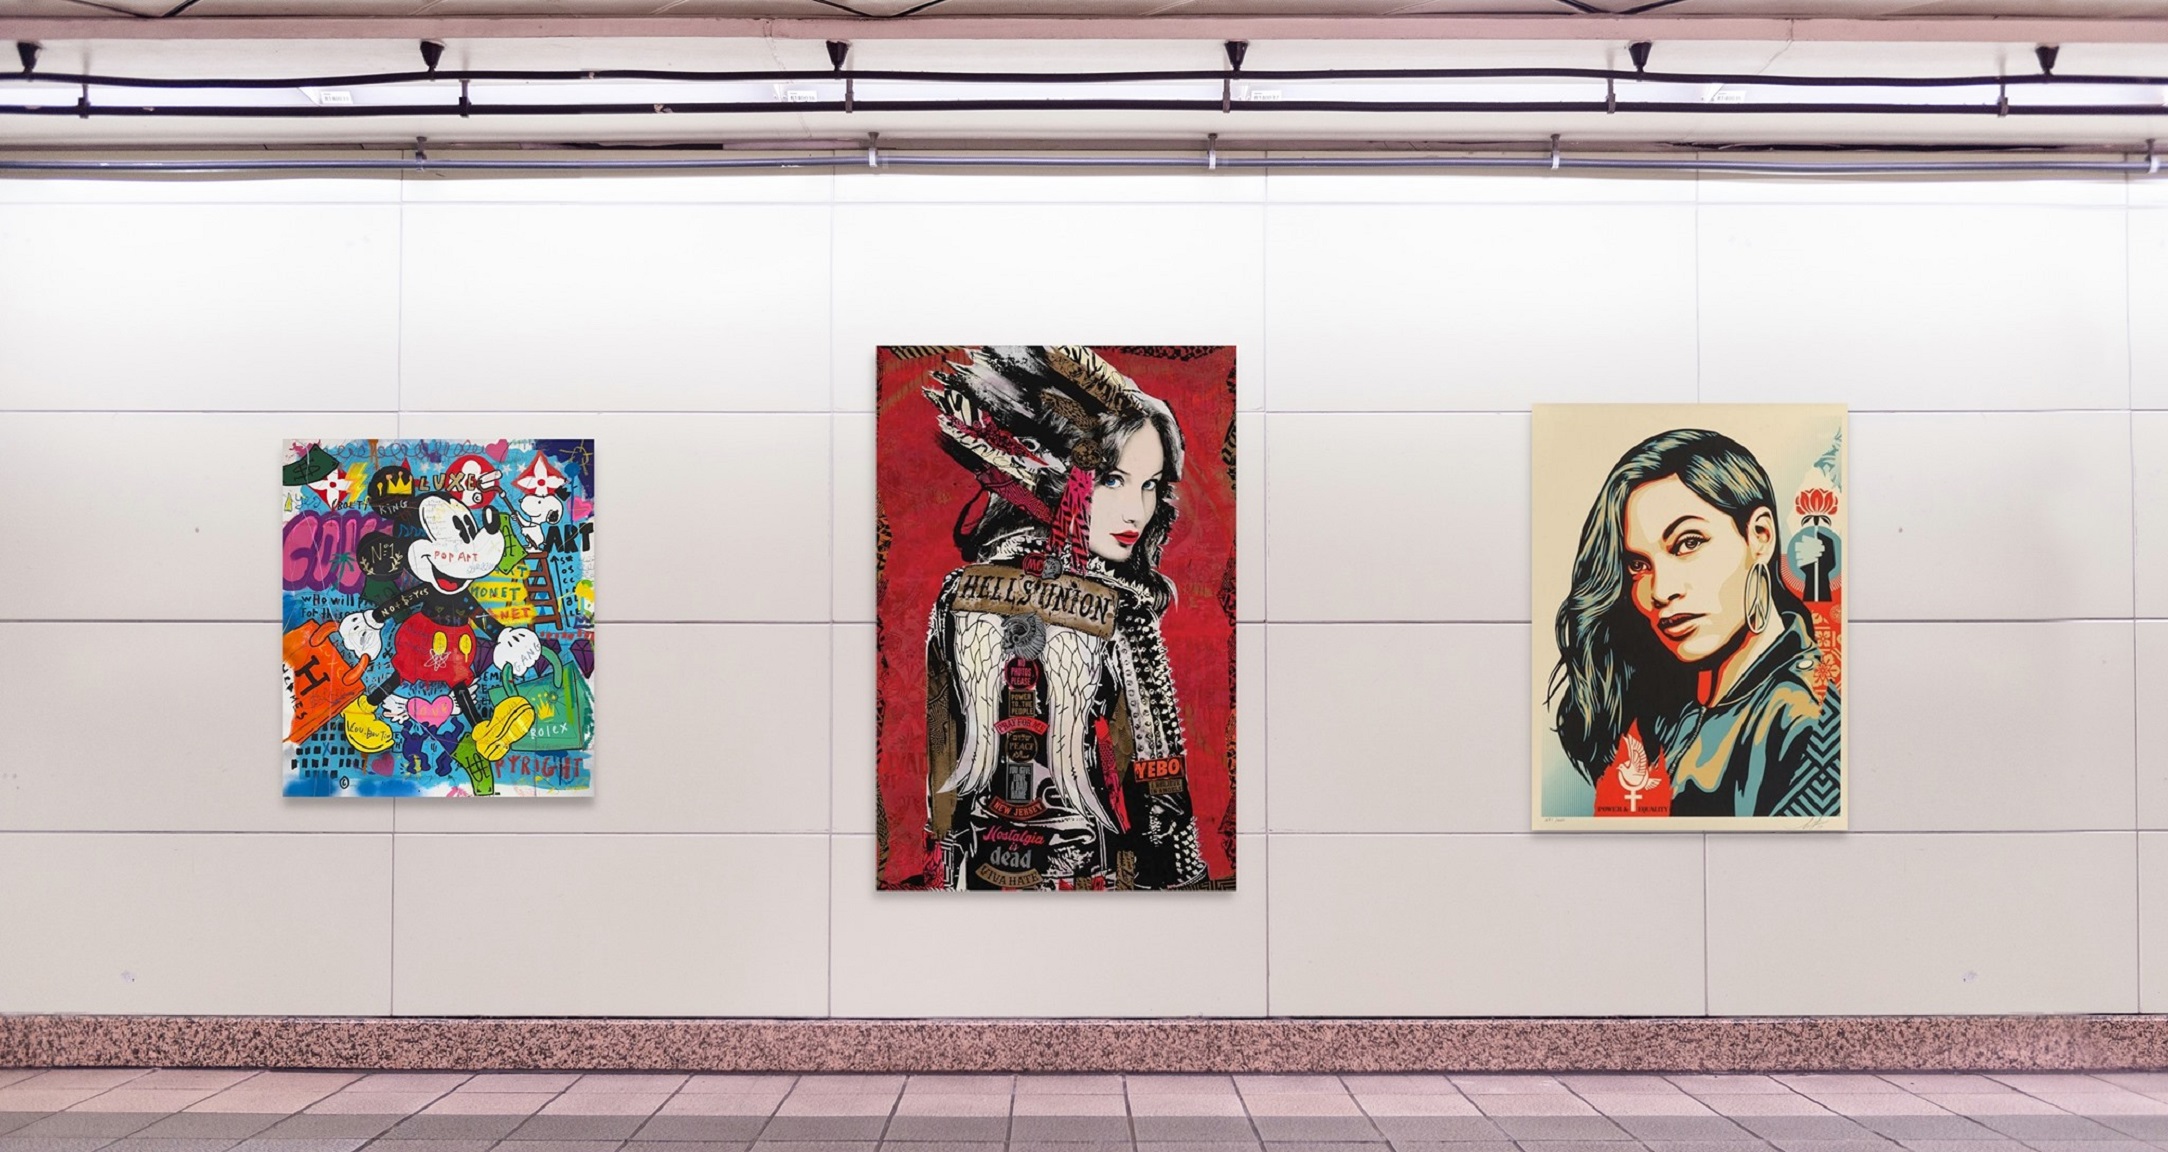 Galleria di Street Art e Pop Art online - The Strip Gallery